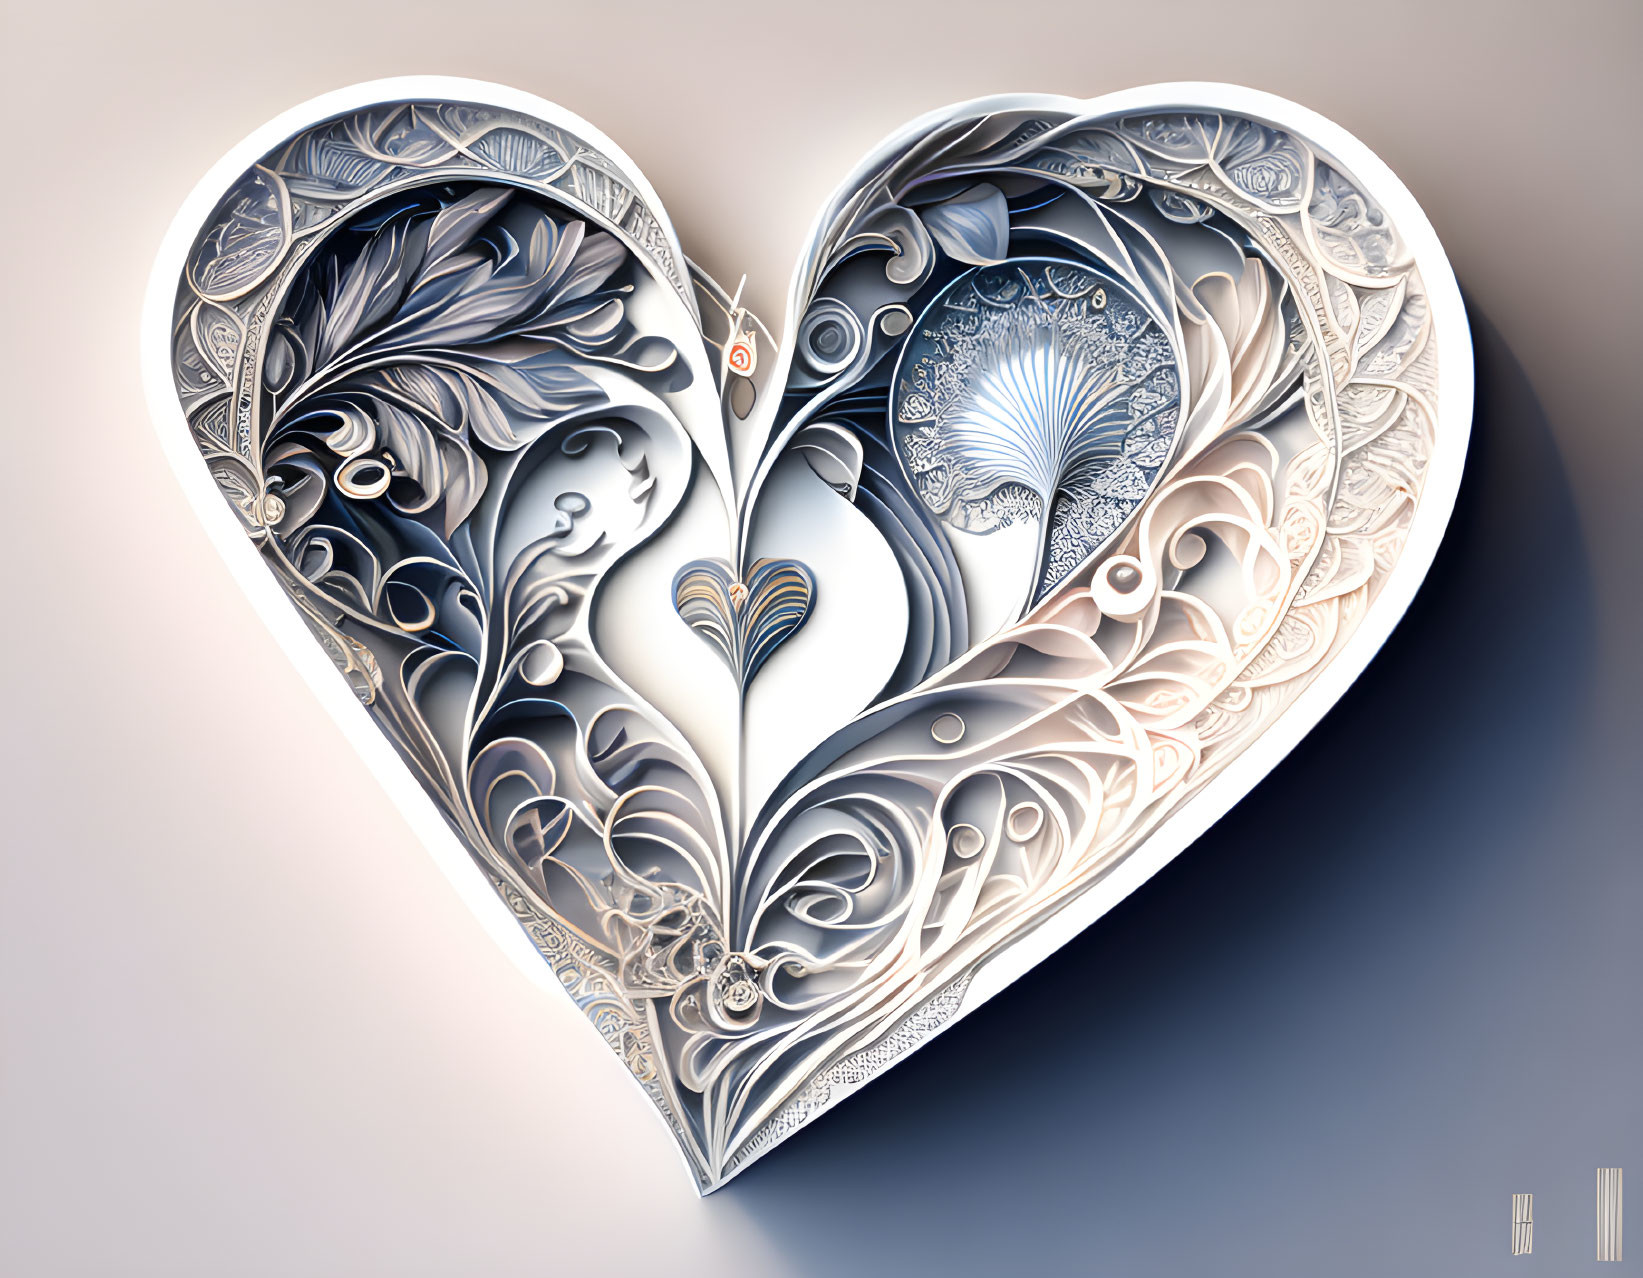 Monochromatic ornamental paper heart with swirls and botanical patterns